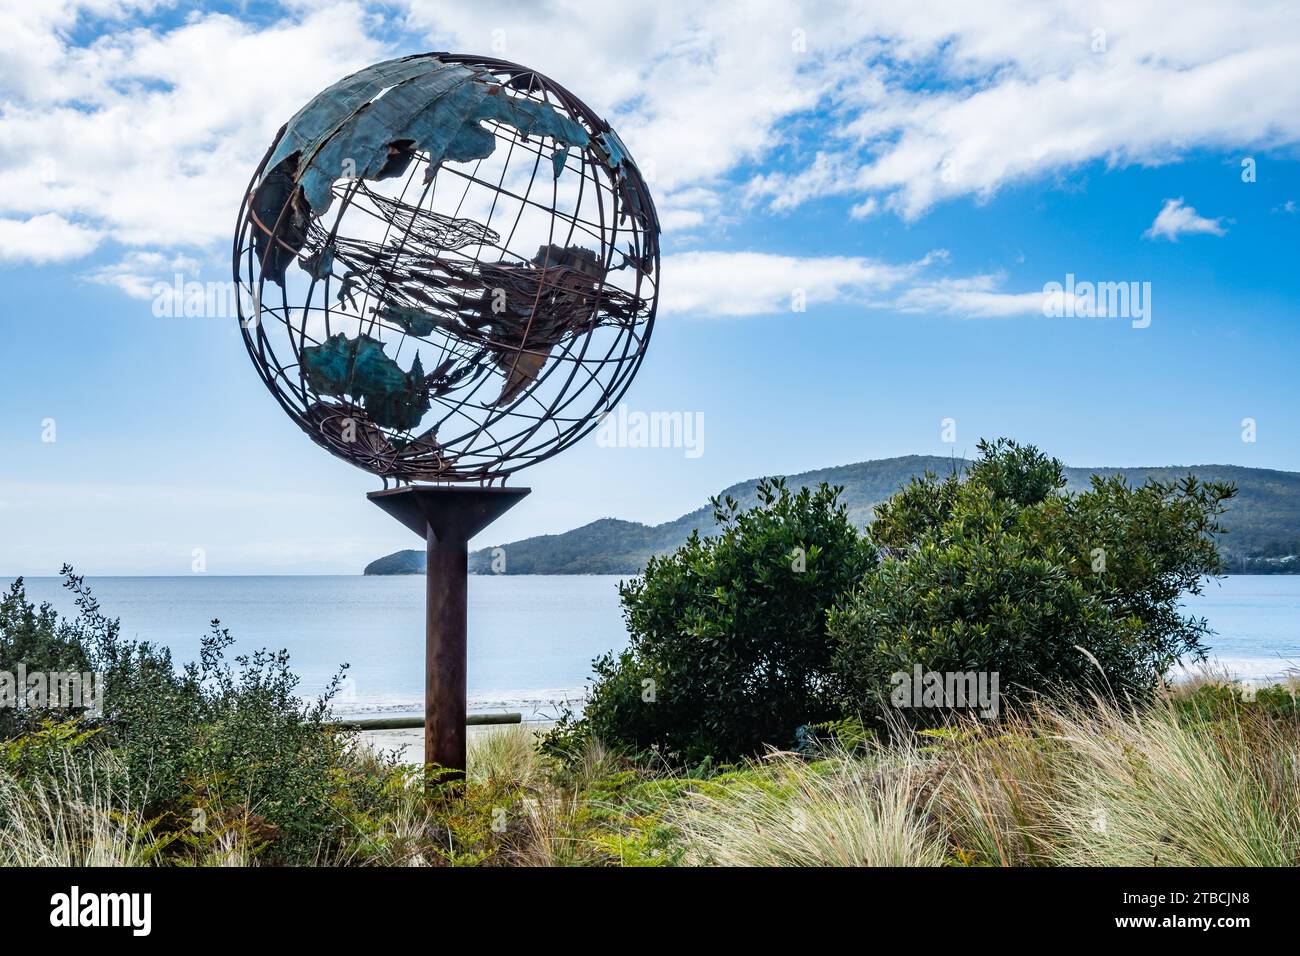 Metal artwork of whales in a globe by the coast of Tasmania, Australia. Stock Photo